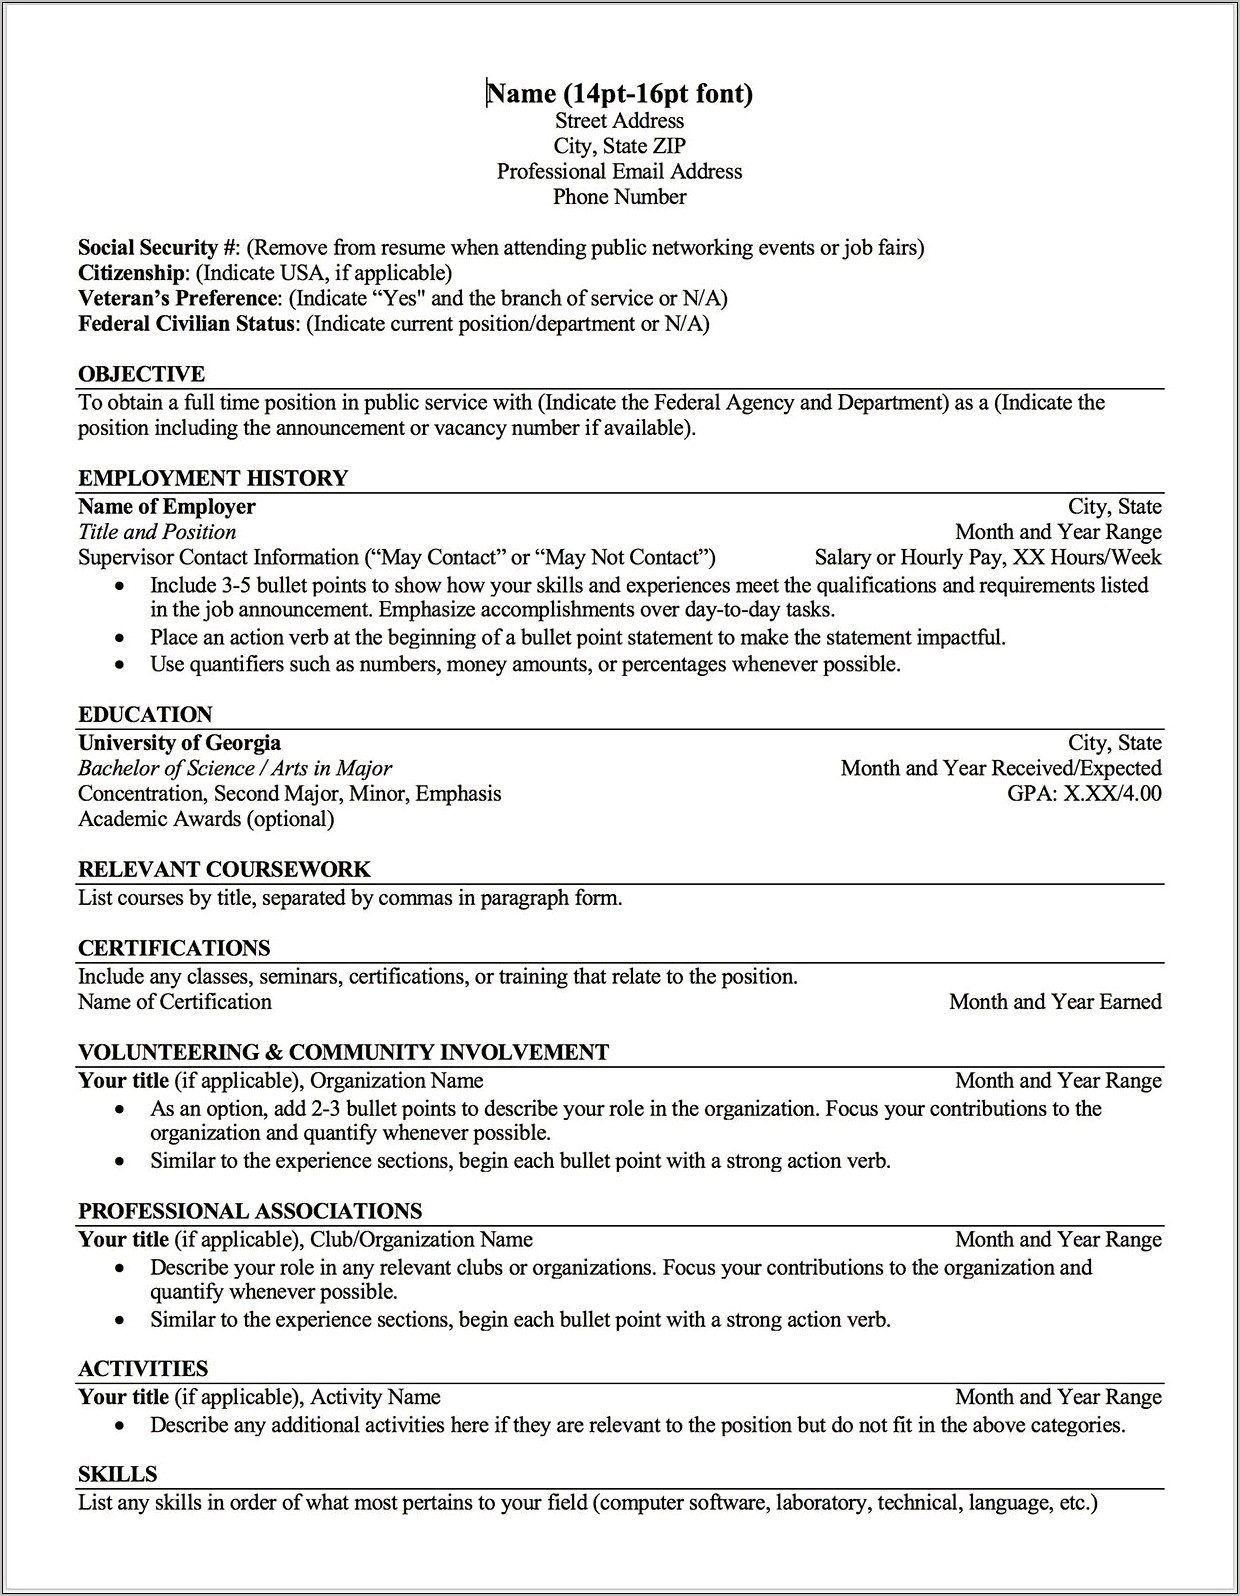 uf career center resume help